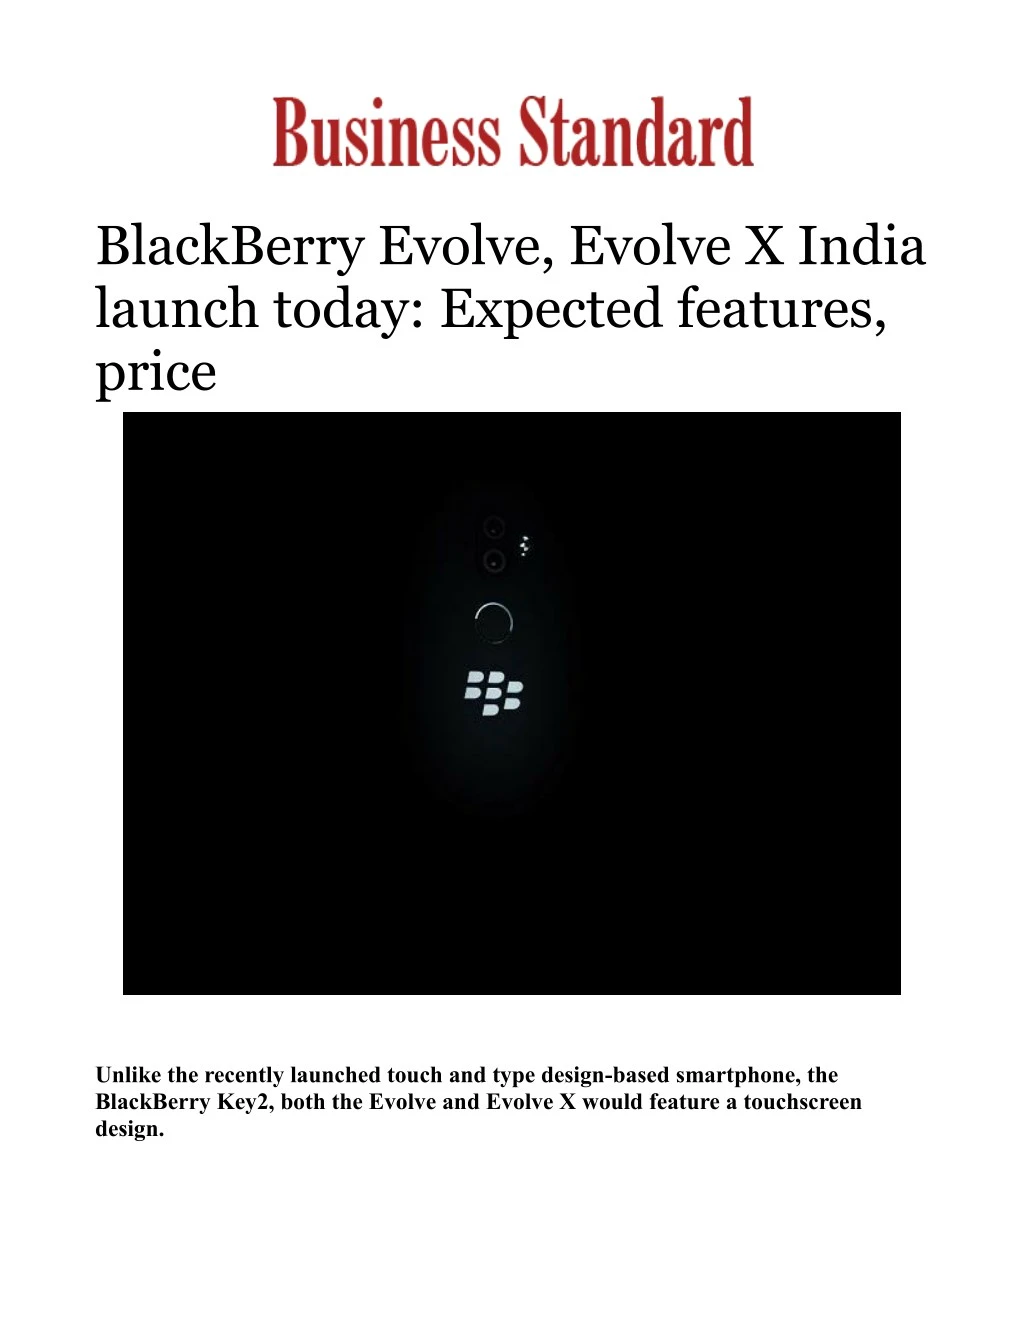 blackberry evolve evolve x india launch today